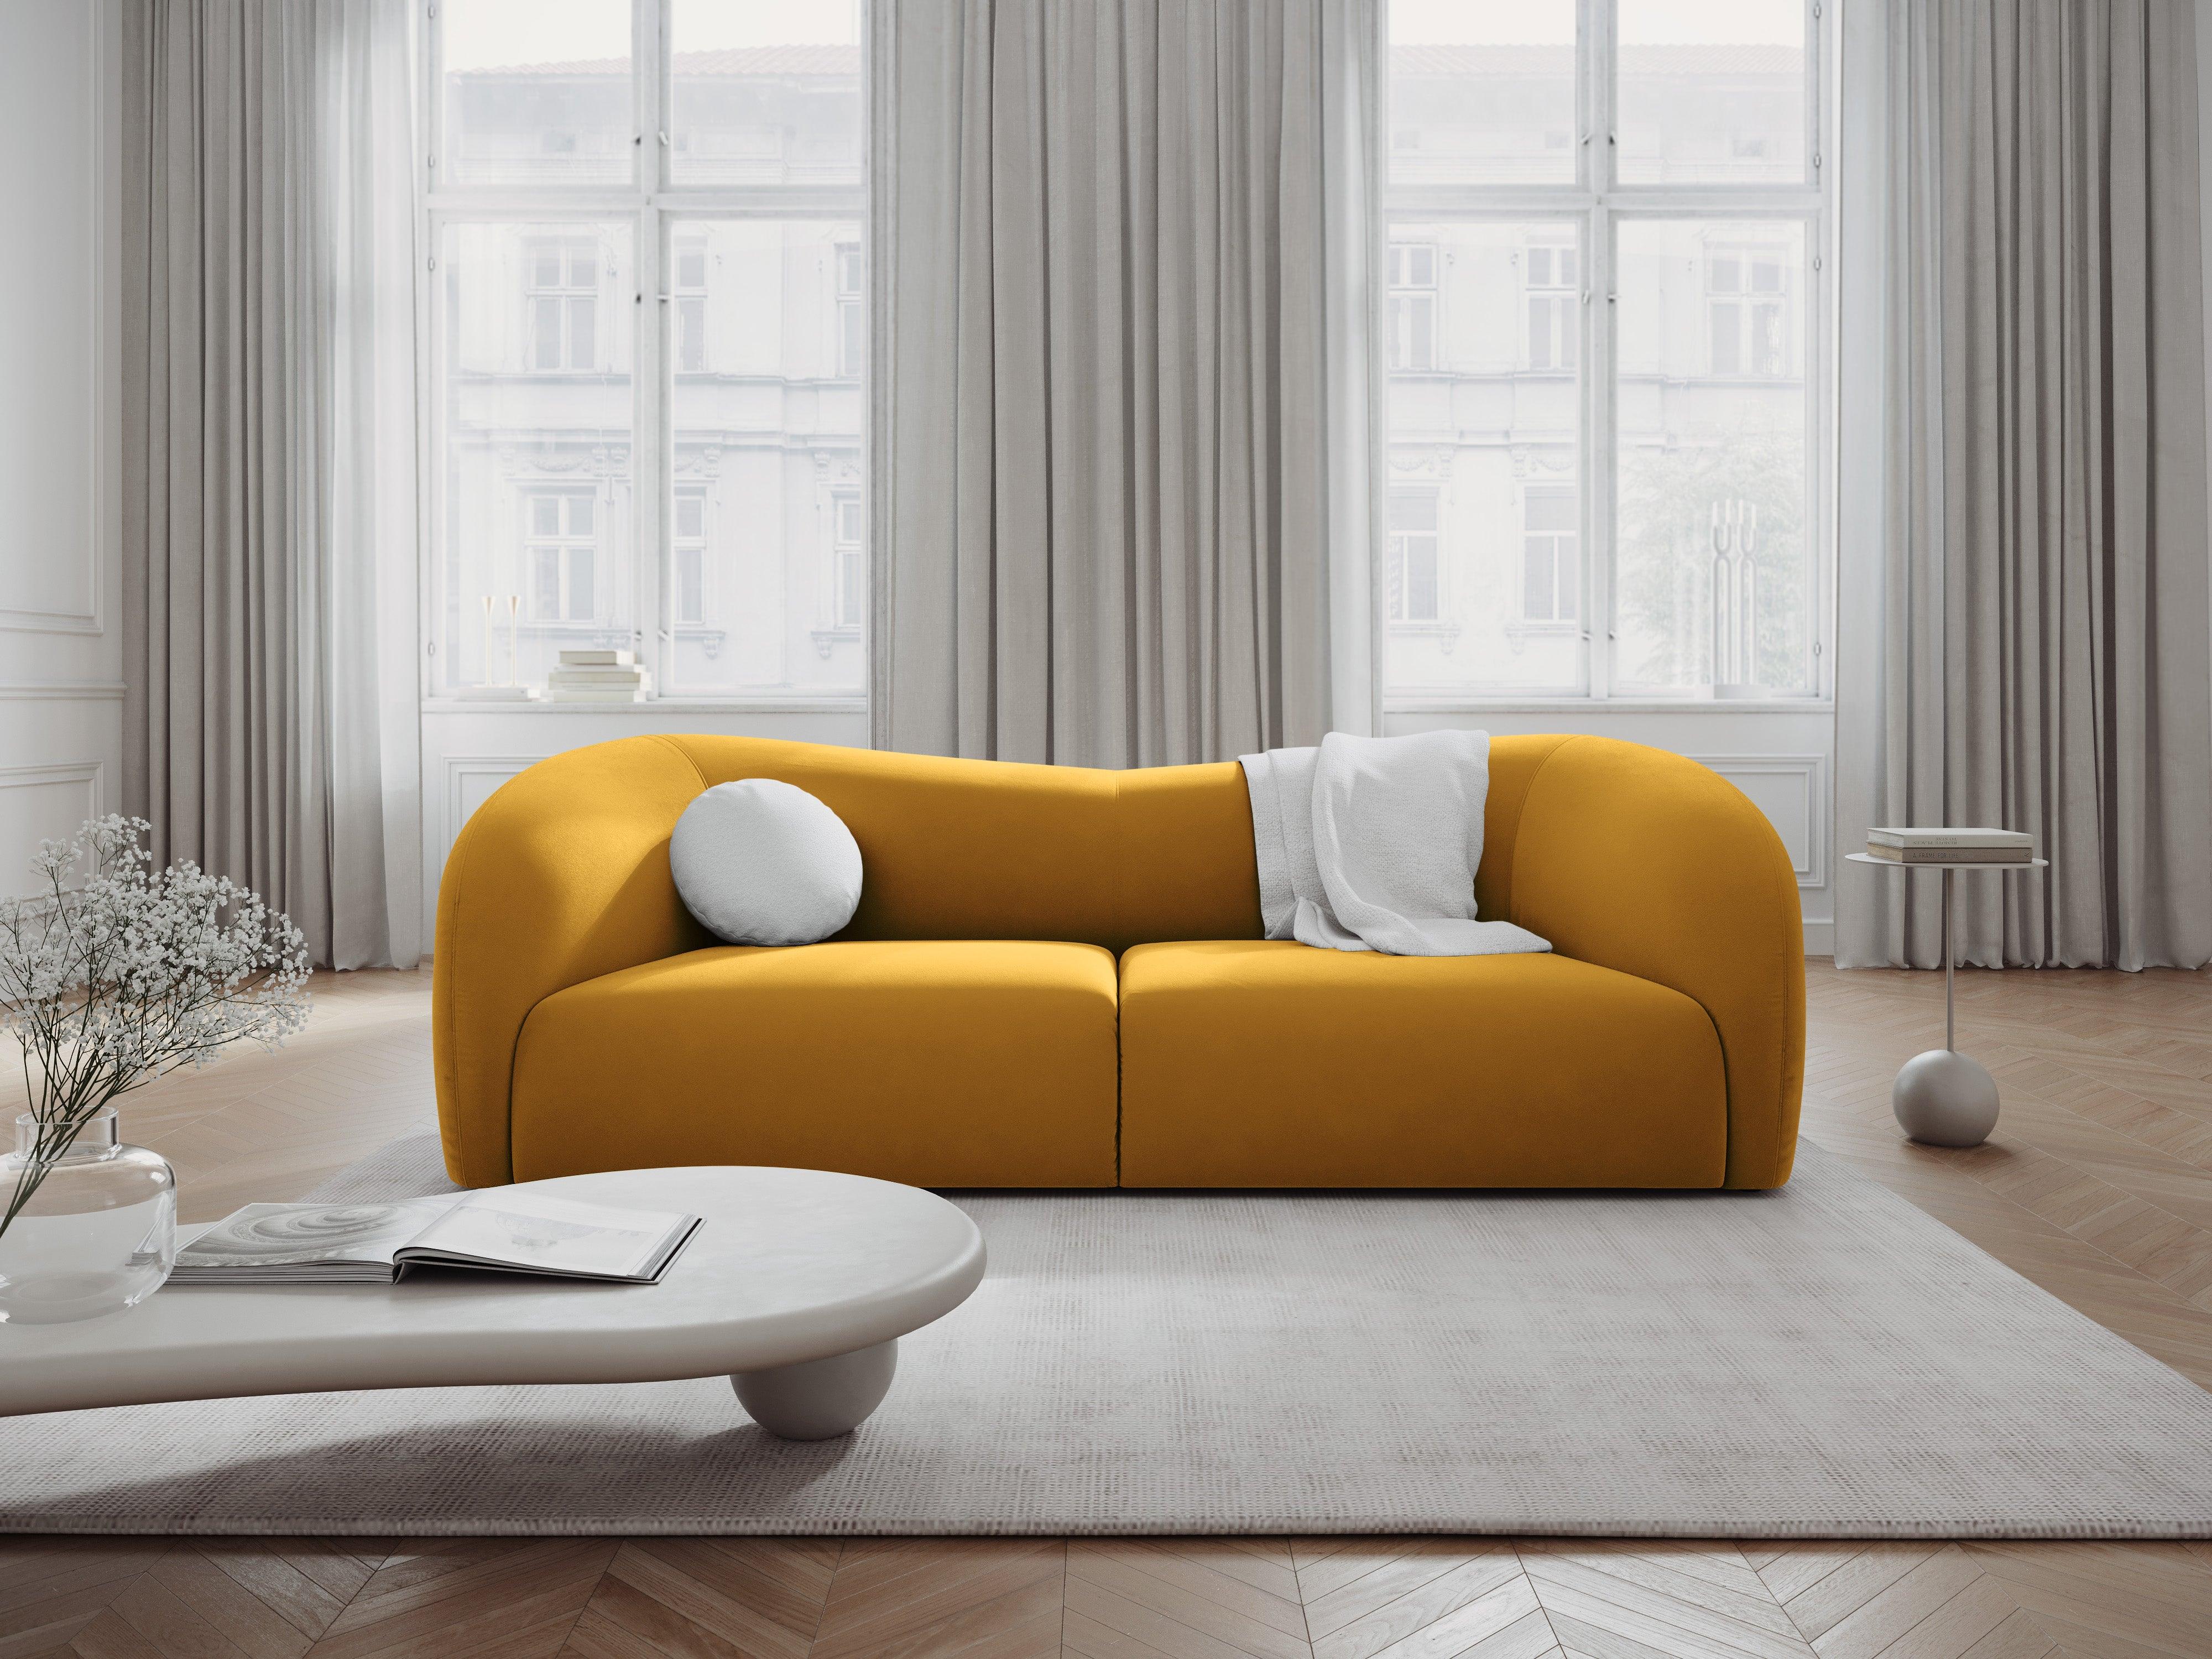 Velvet Sofa, "Santi", 3 Seats, Yellow, 237x90x75
Made in Europe Interieurs 86    Eye on Design